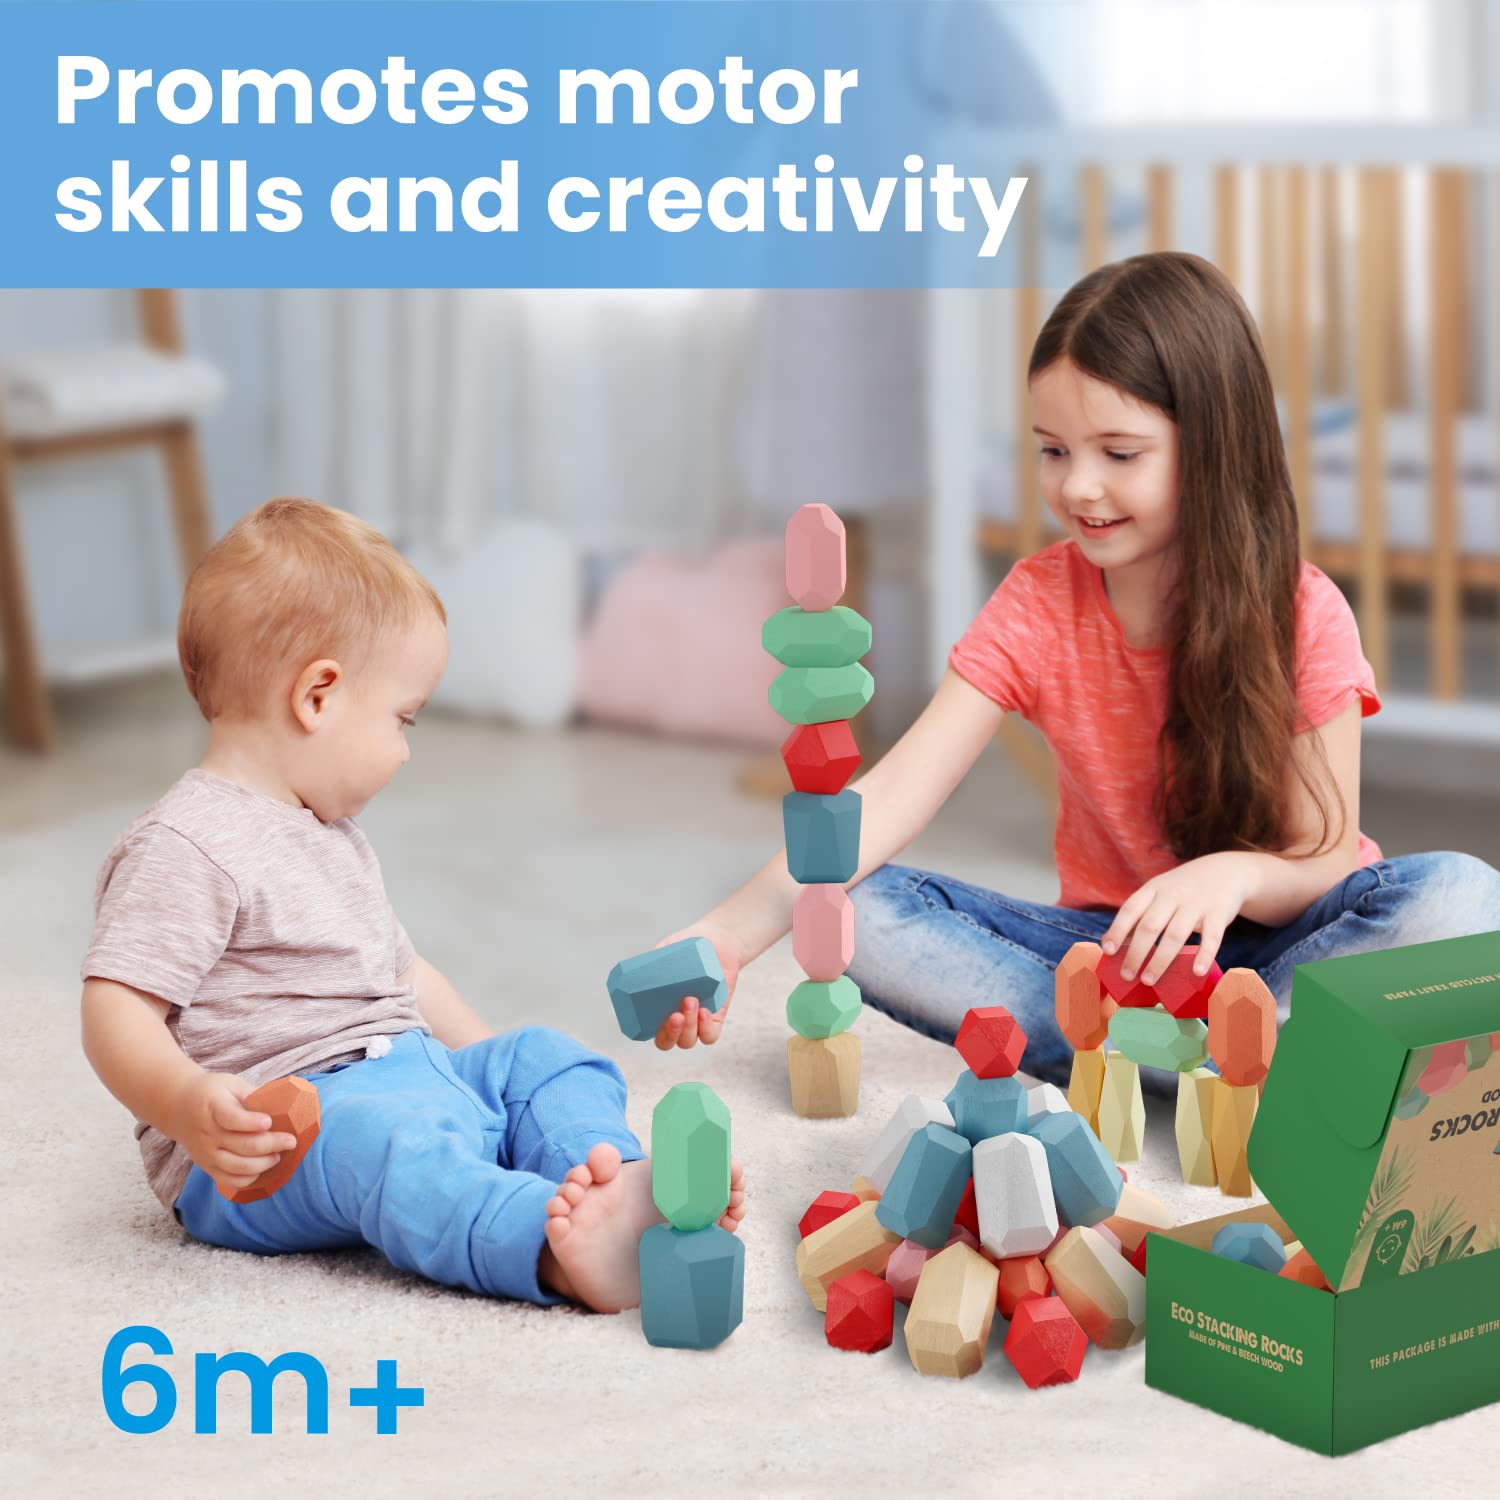 EVERSMART 36 Pcs Wooden Stacking Blocks – Montessori Toys for 1 2 3 4 5 6 Year Old Toddlers and Kids, XXL Rocks, No Choking Hazard – Sensory STEM Building Stones, Girl or Boy Birthday Gifts